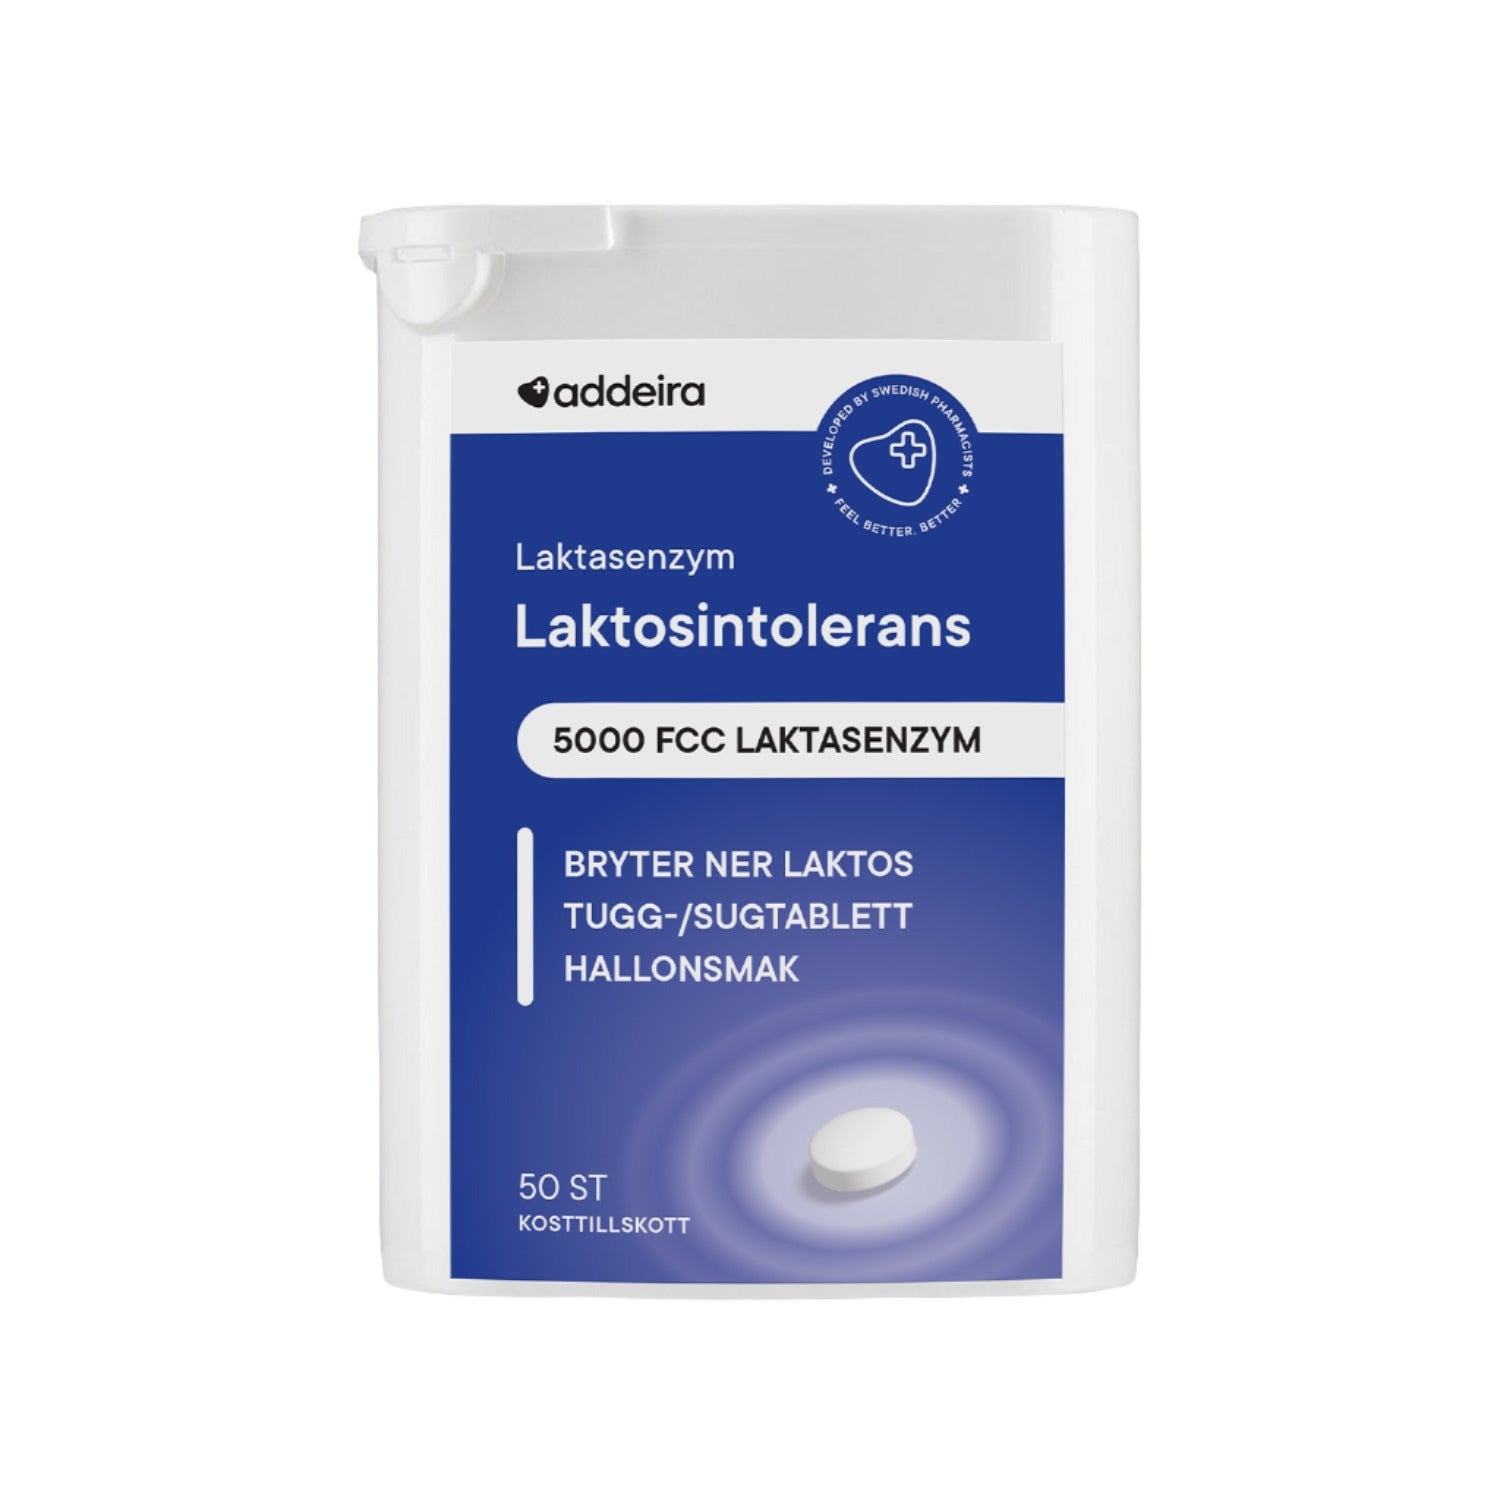 Laktasenzym tuggtablett vid laktosintolerans